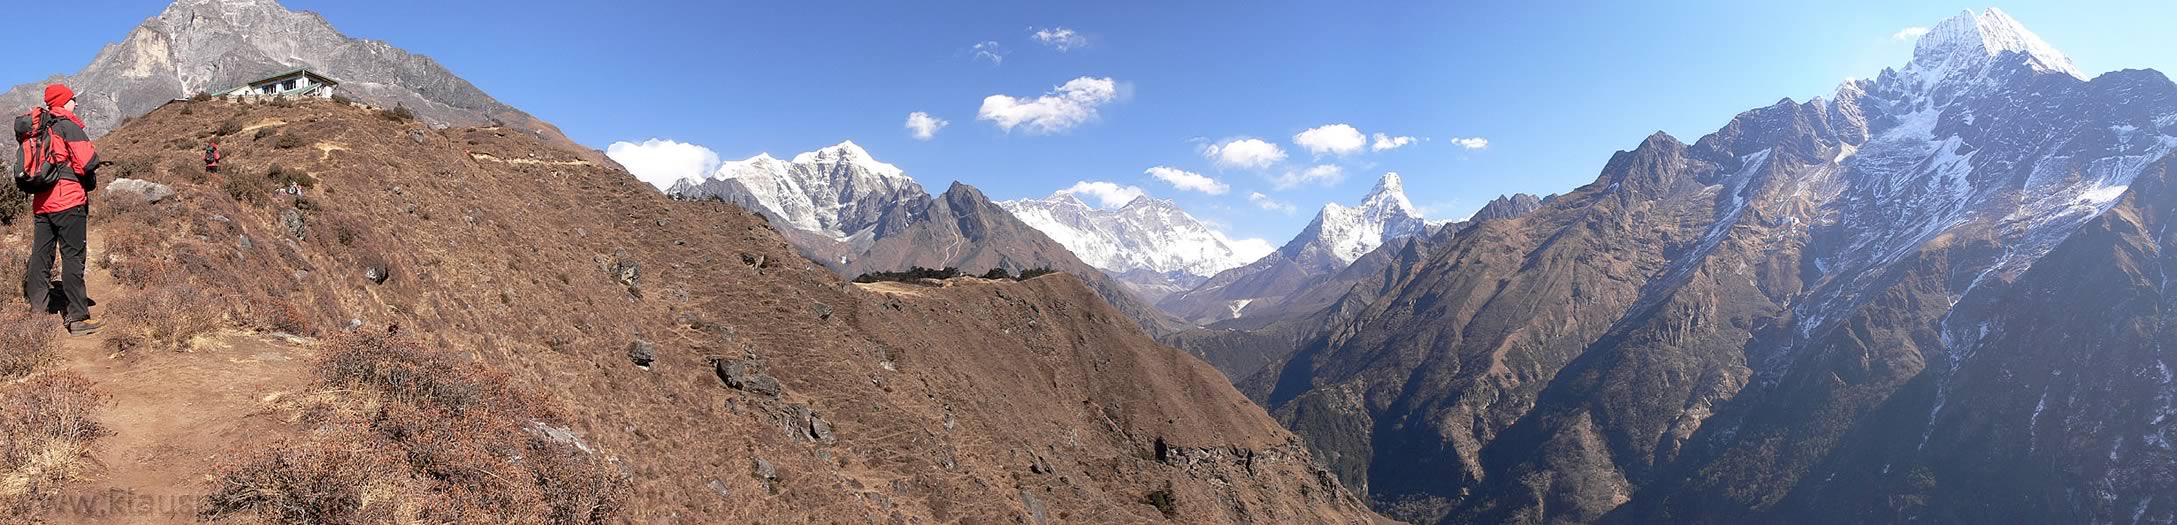 Panorama am Mt. Everest